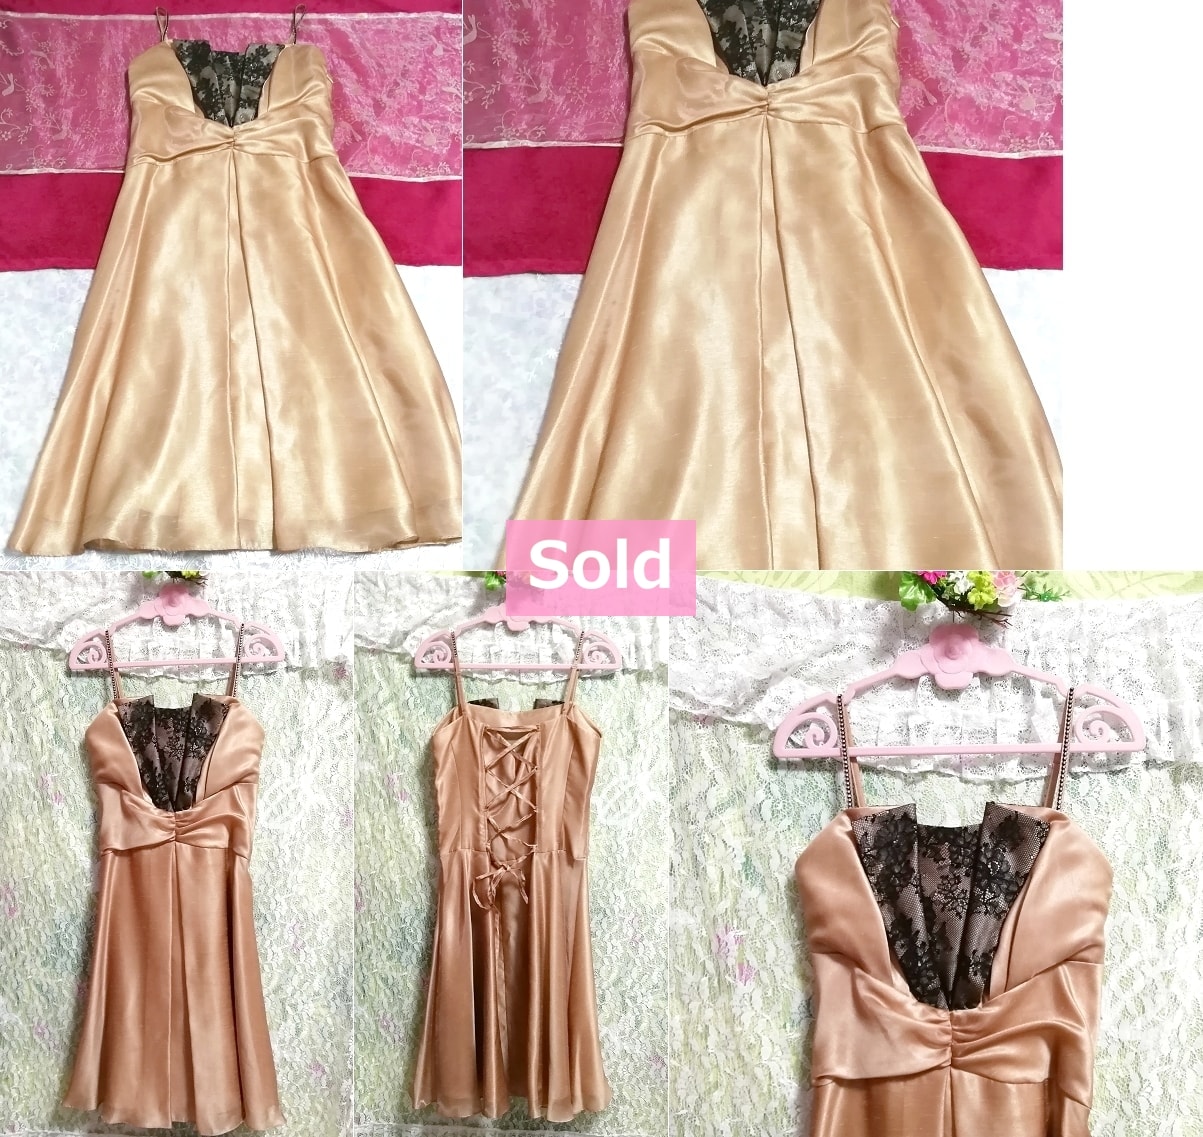 Genet Vivien ジュネビビアン 日本製亜麻色キャミソールワンピースドレス Made in japan flax color camisole onepiece dress